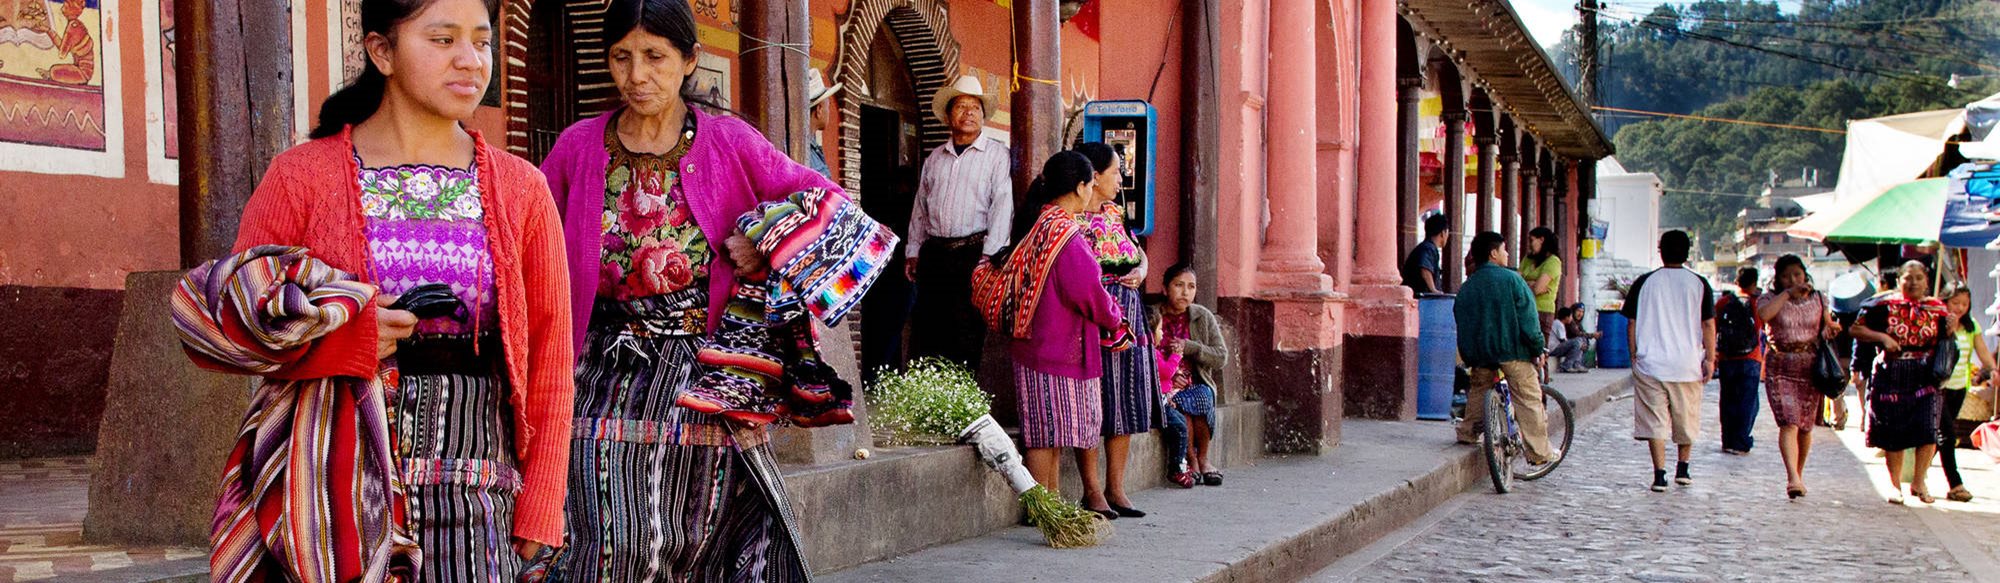 Guatemalas dating traditioner